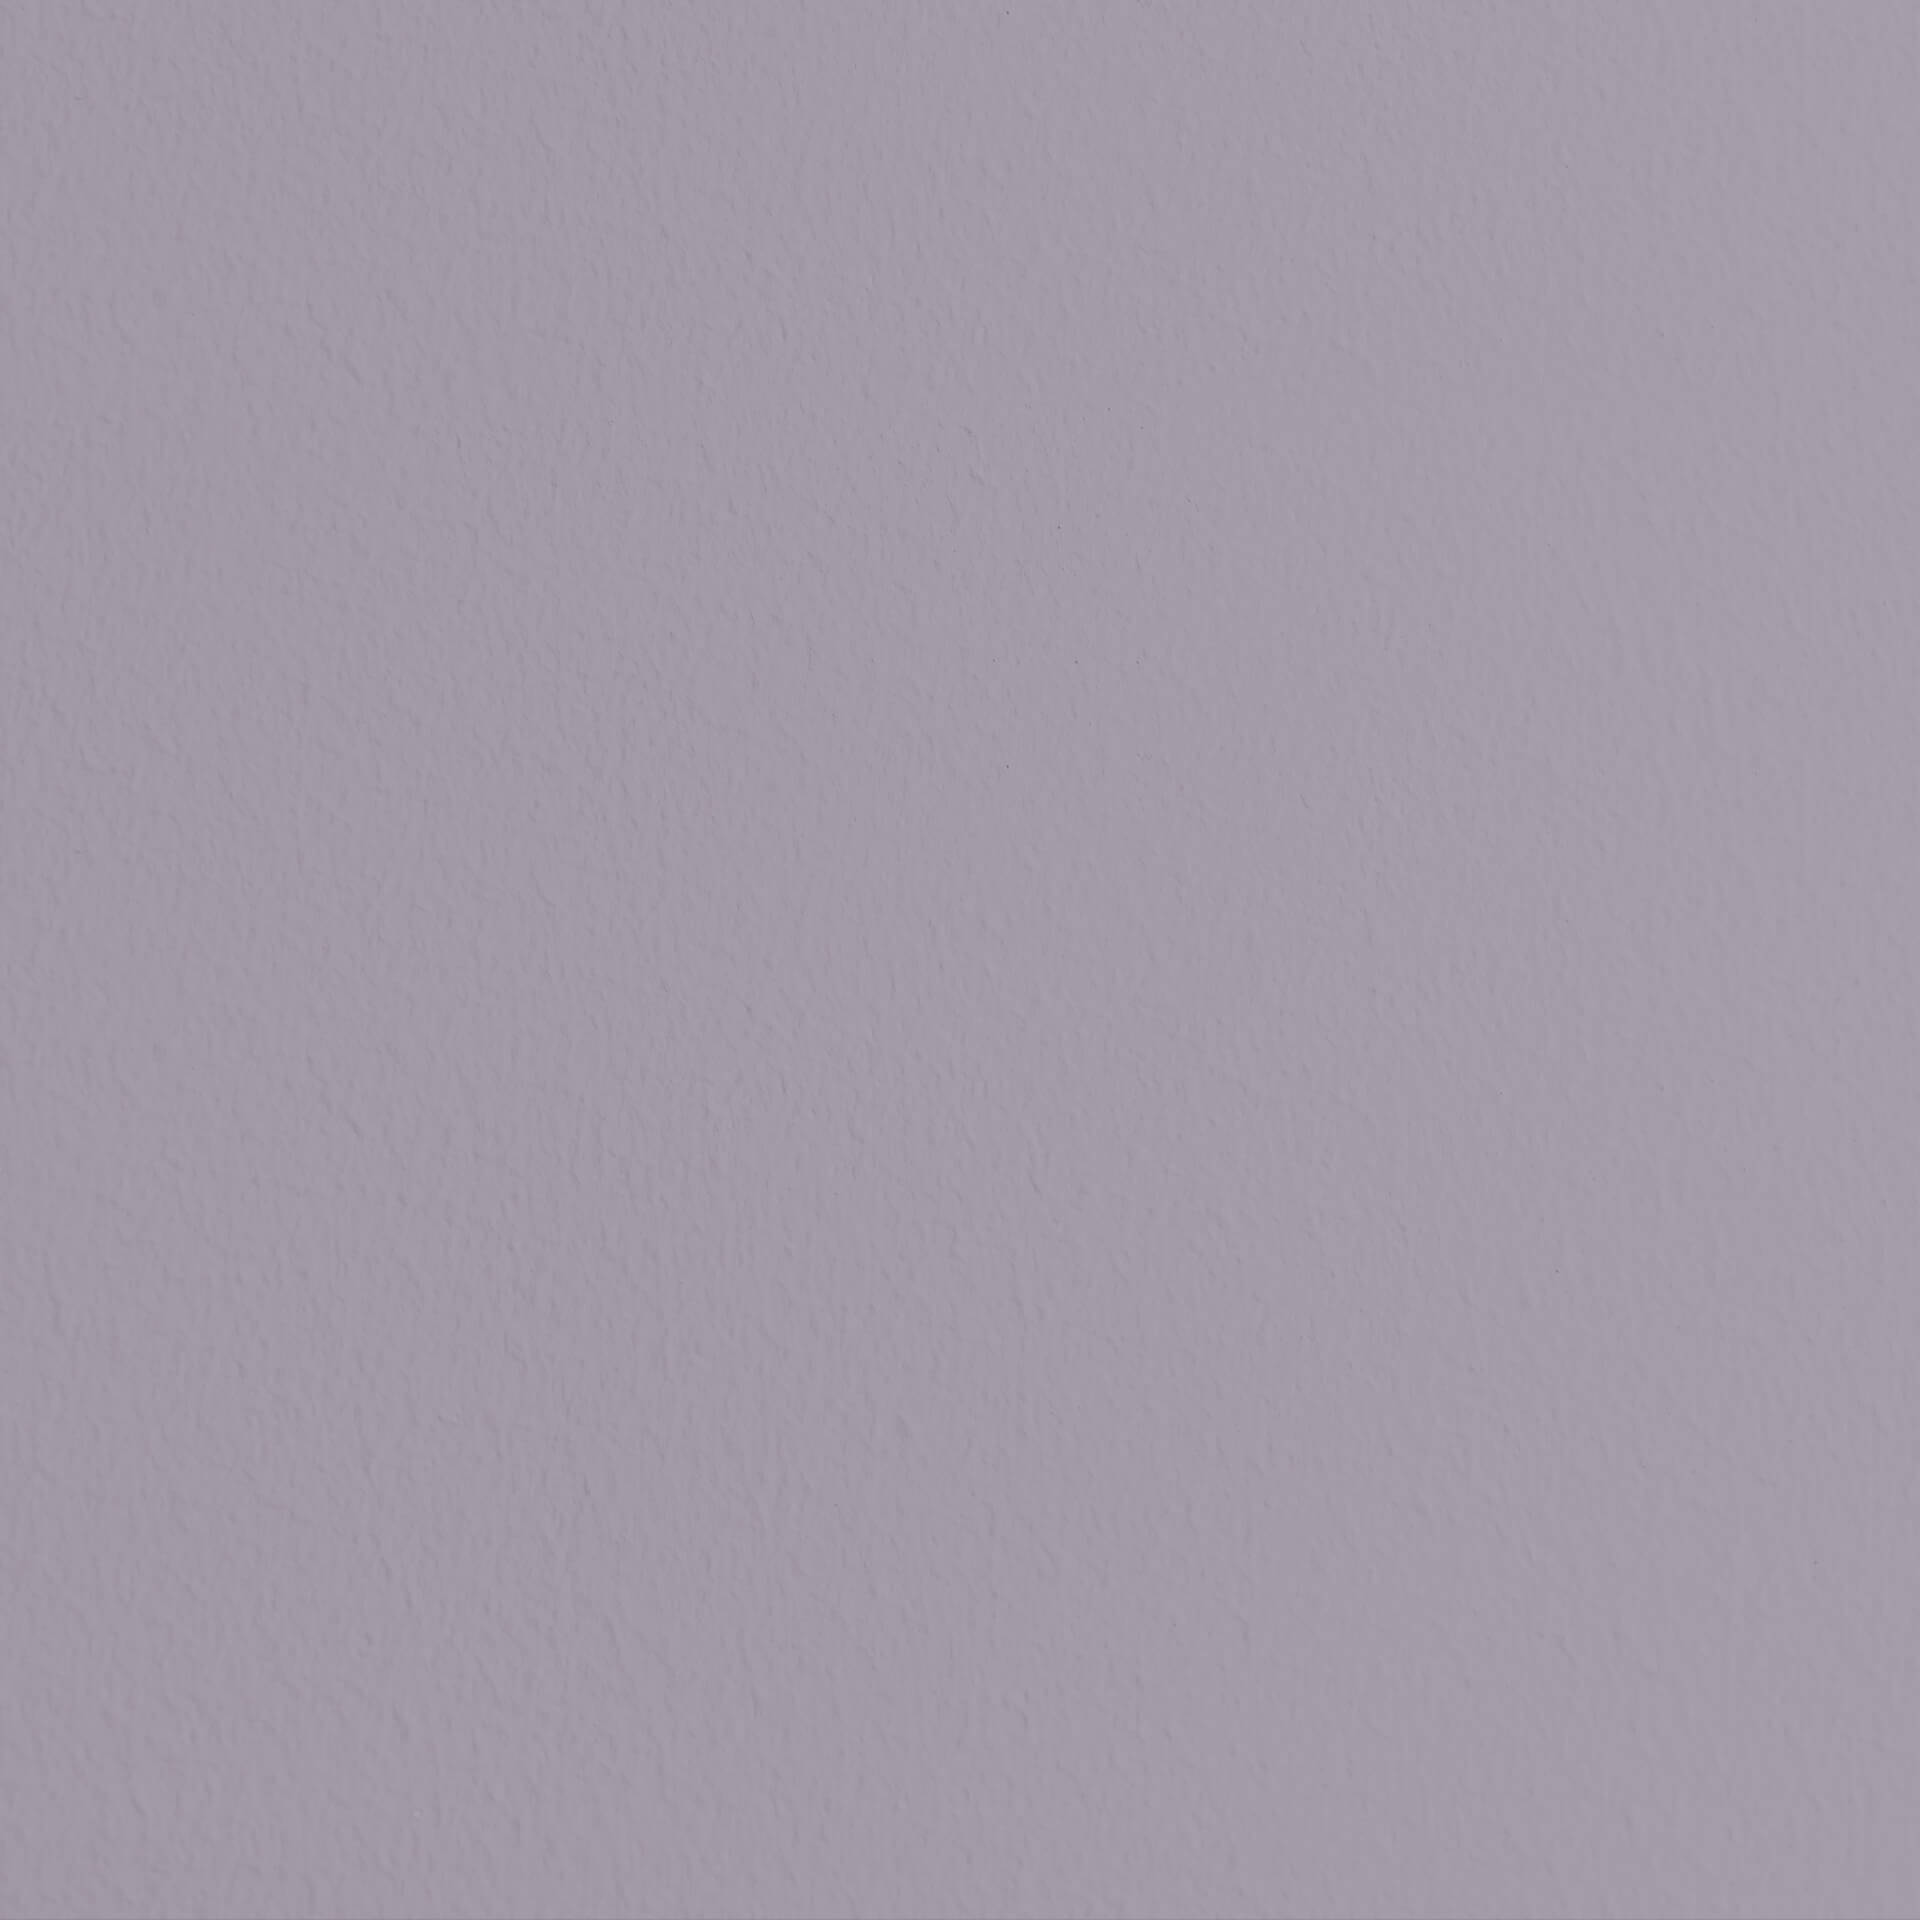 Mylands Lavender Garden No. 30 - Marble Matt Emulsion / Wandfarbe, 100ml